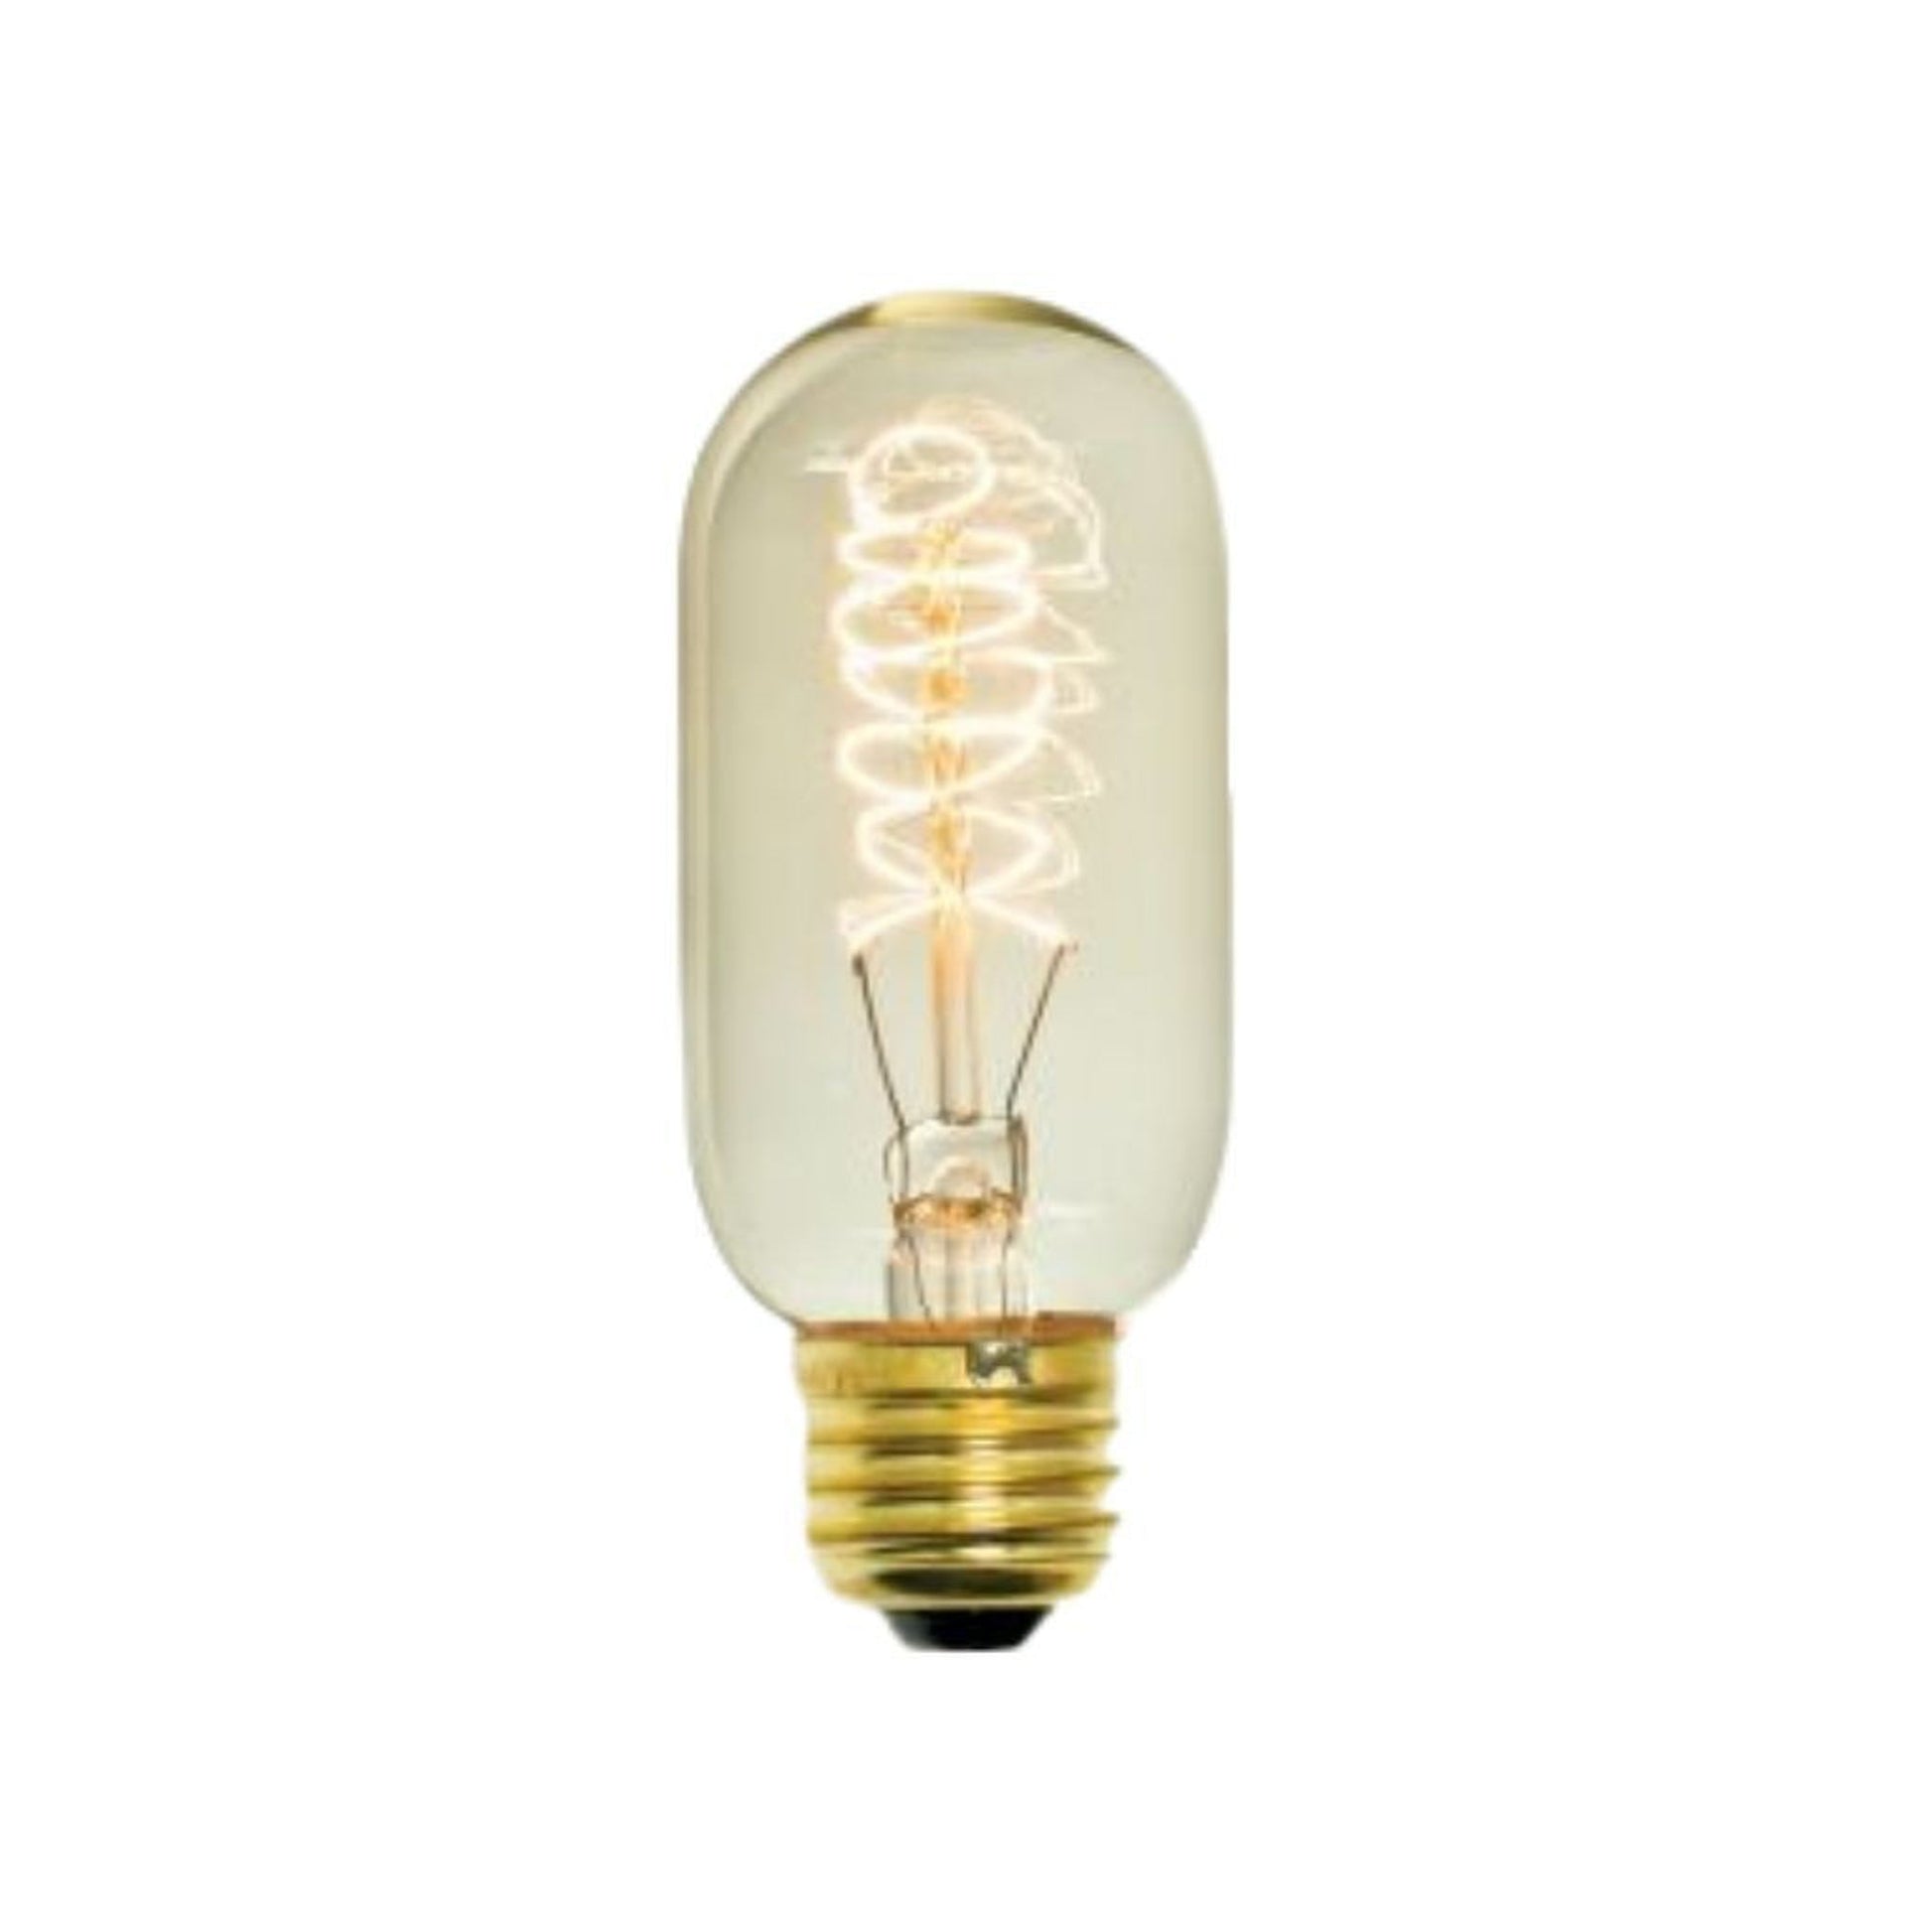 Craftmade 40-Watt T14 Clear Amber Finish, E26 Medium Base, 4.3" M.O.L., 2200K Warm White Incandescent Light Bulb